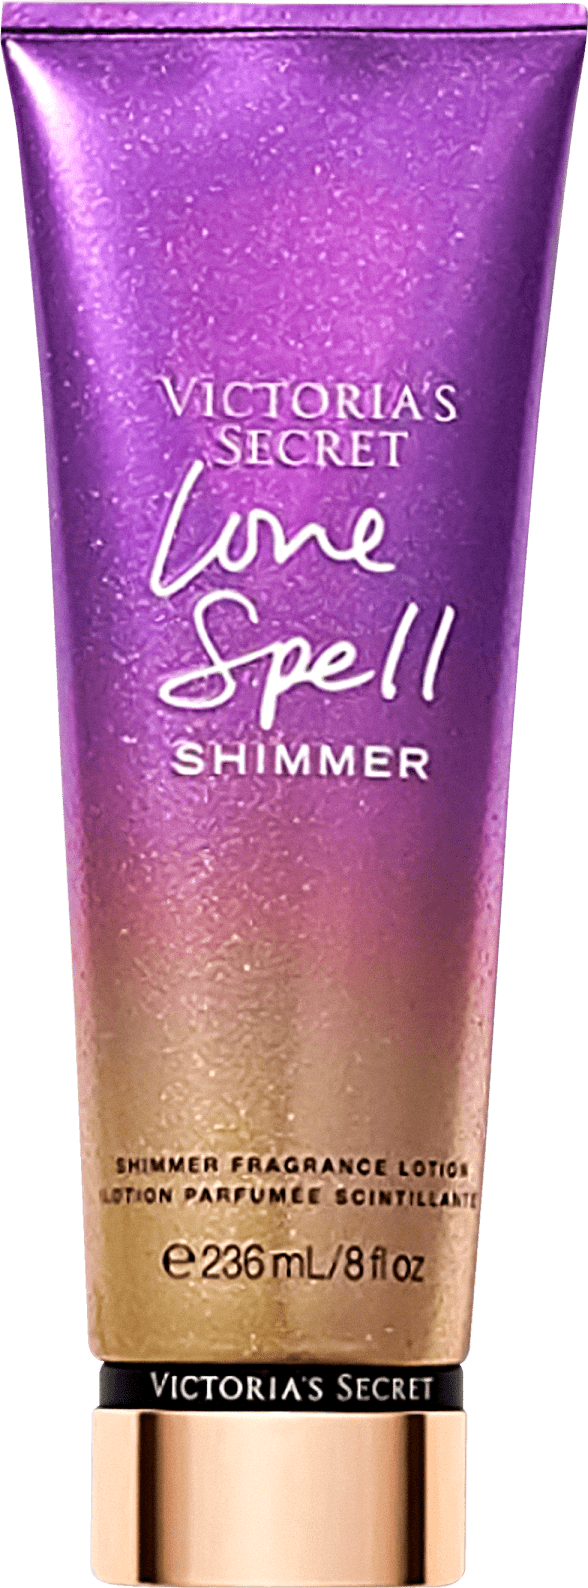 Kit Body Splash + Body Lotion Love Spell Shimmer Victoria's Secret - Bi  Store Cosméticos